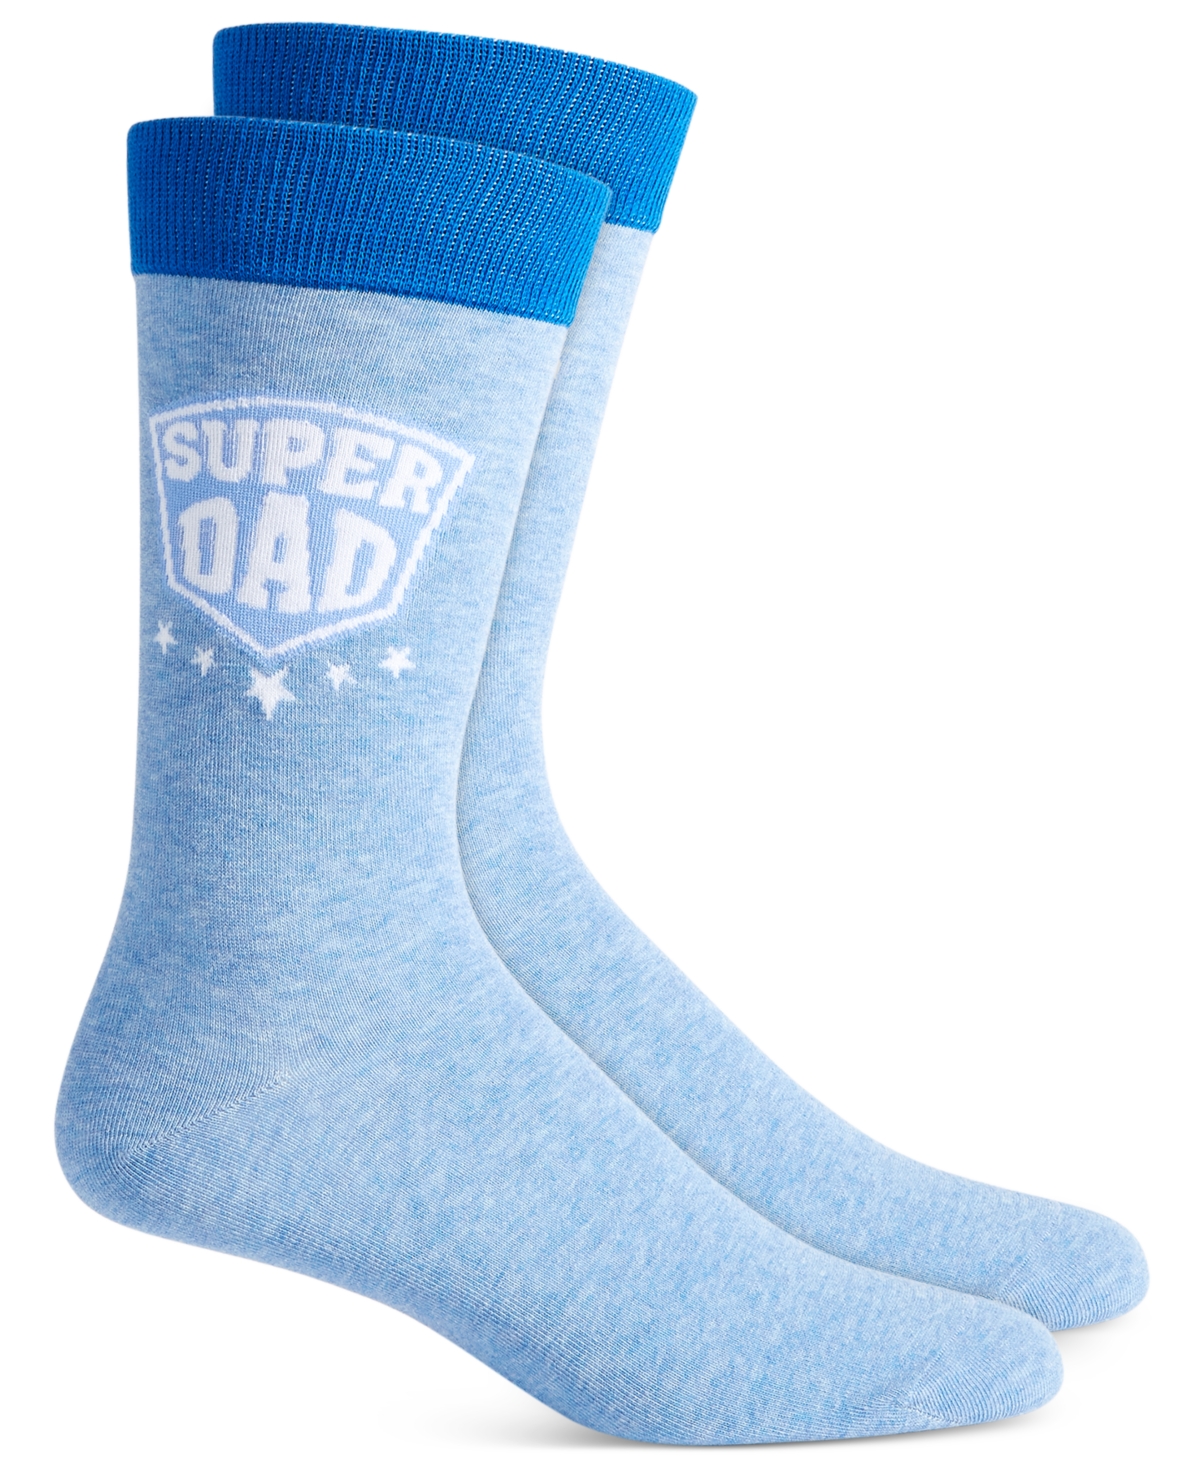 Men's Super Dad Crew Socks, Created for Macy's - Blue/white